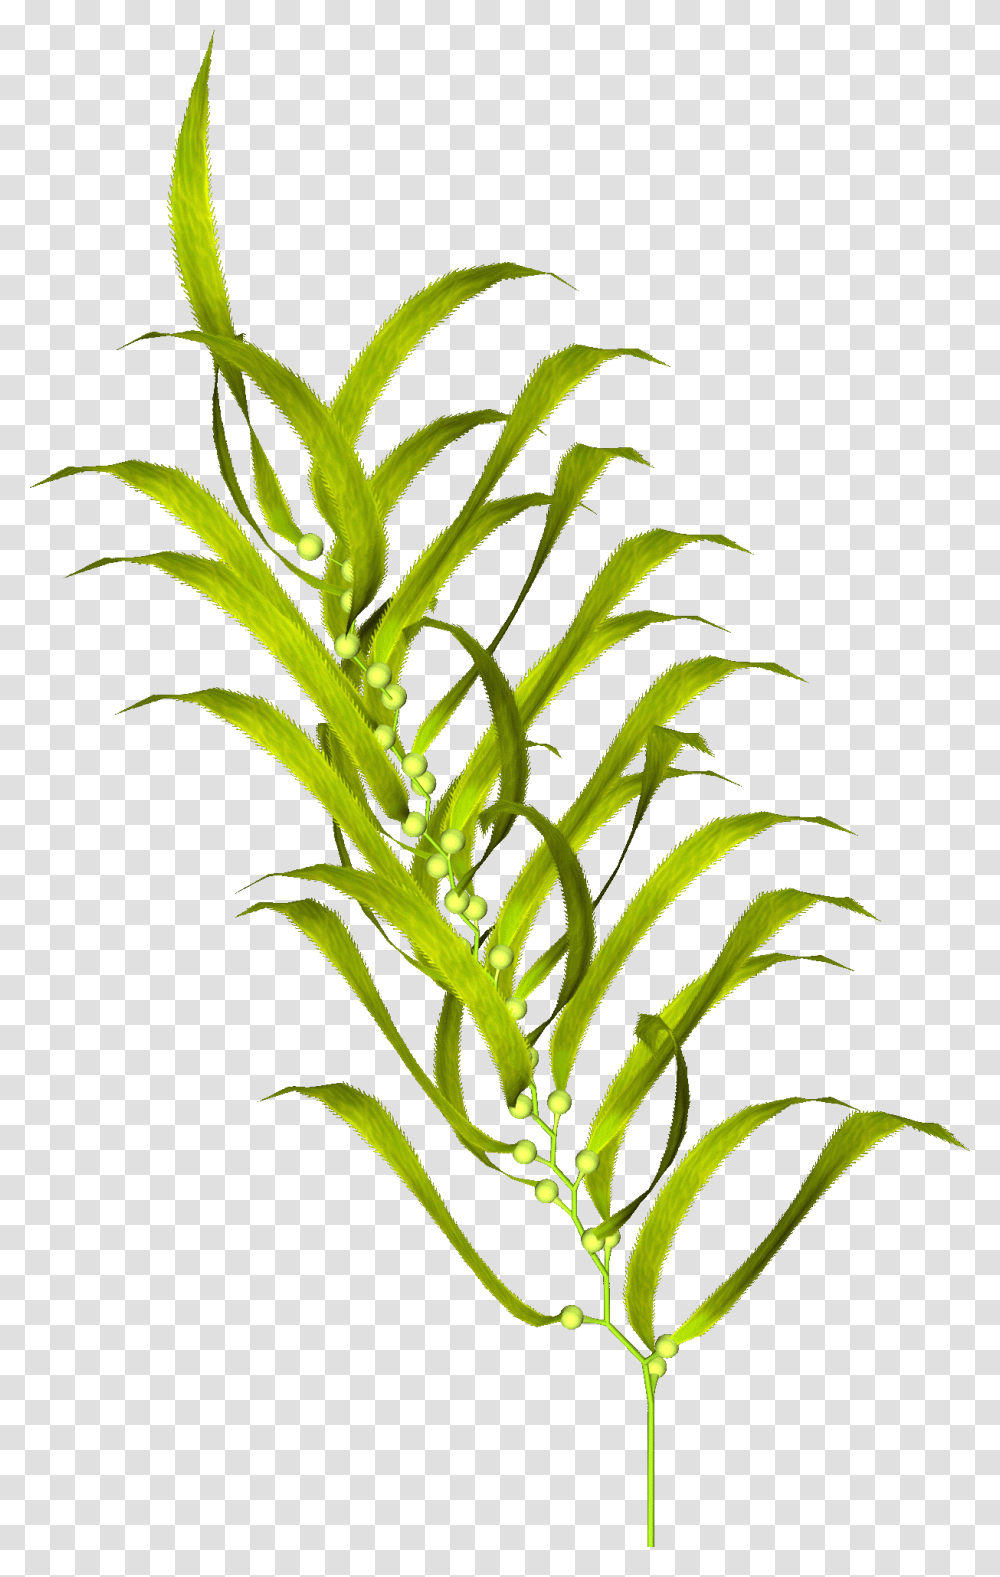 Moss Vector Algae Vodorosli Prozrachnij Fon, Plant, Food, Vegetable, Produce Transparent Png